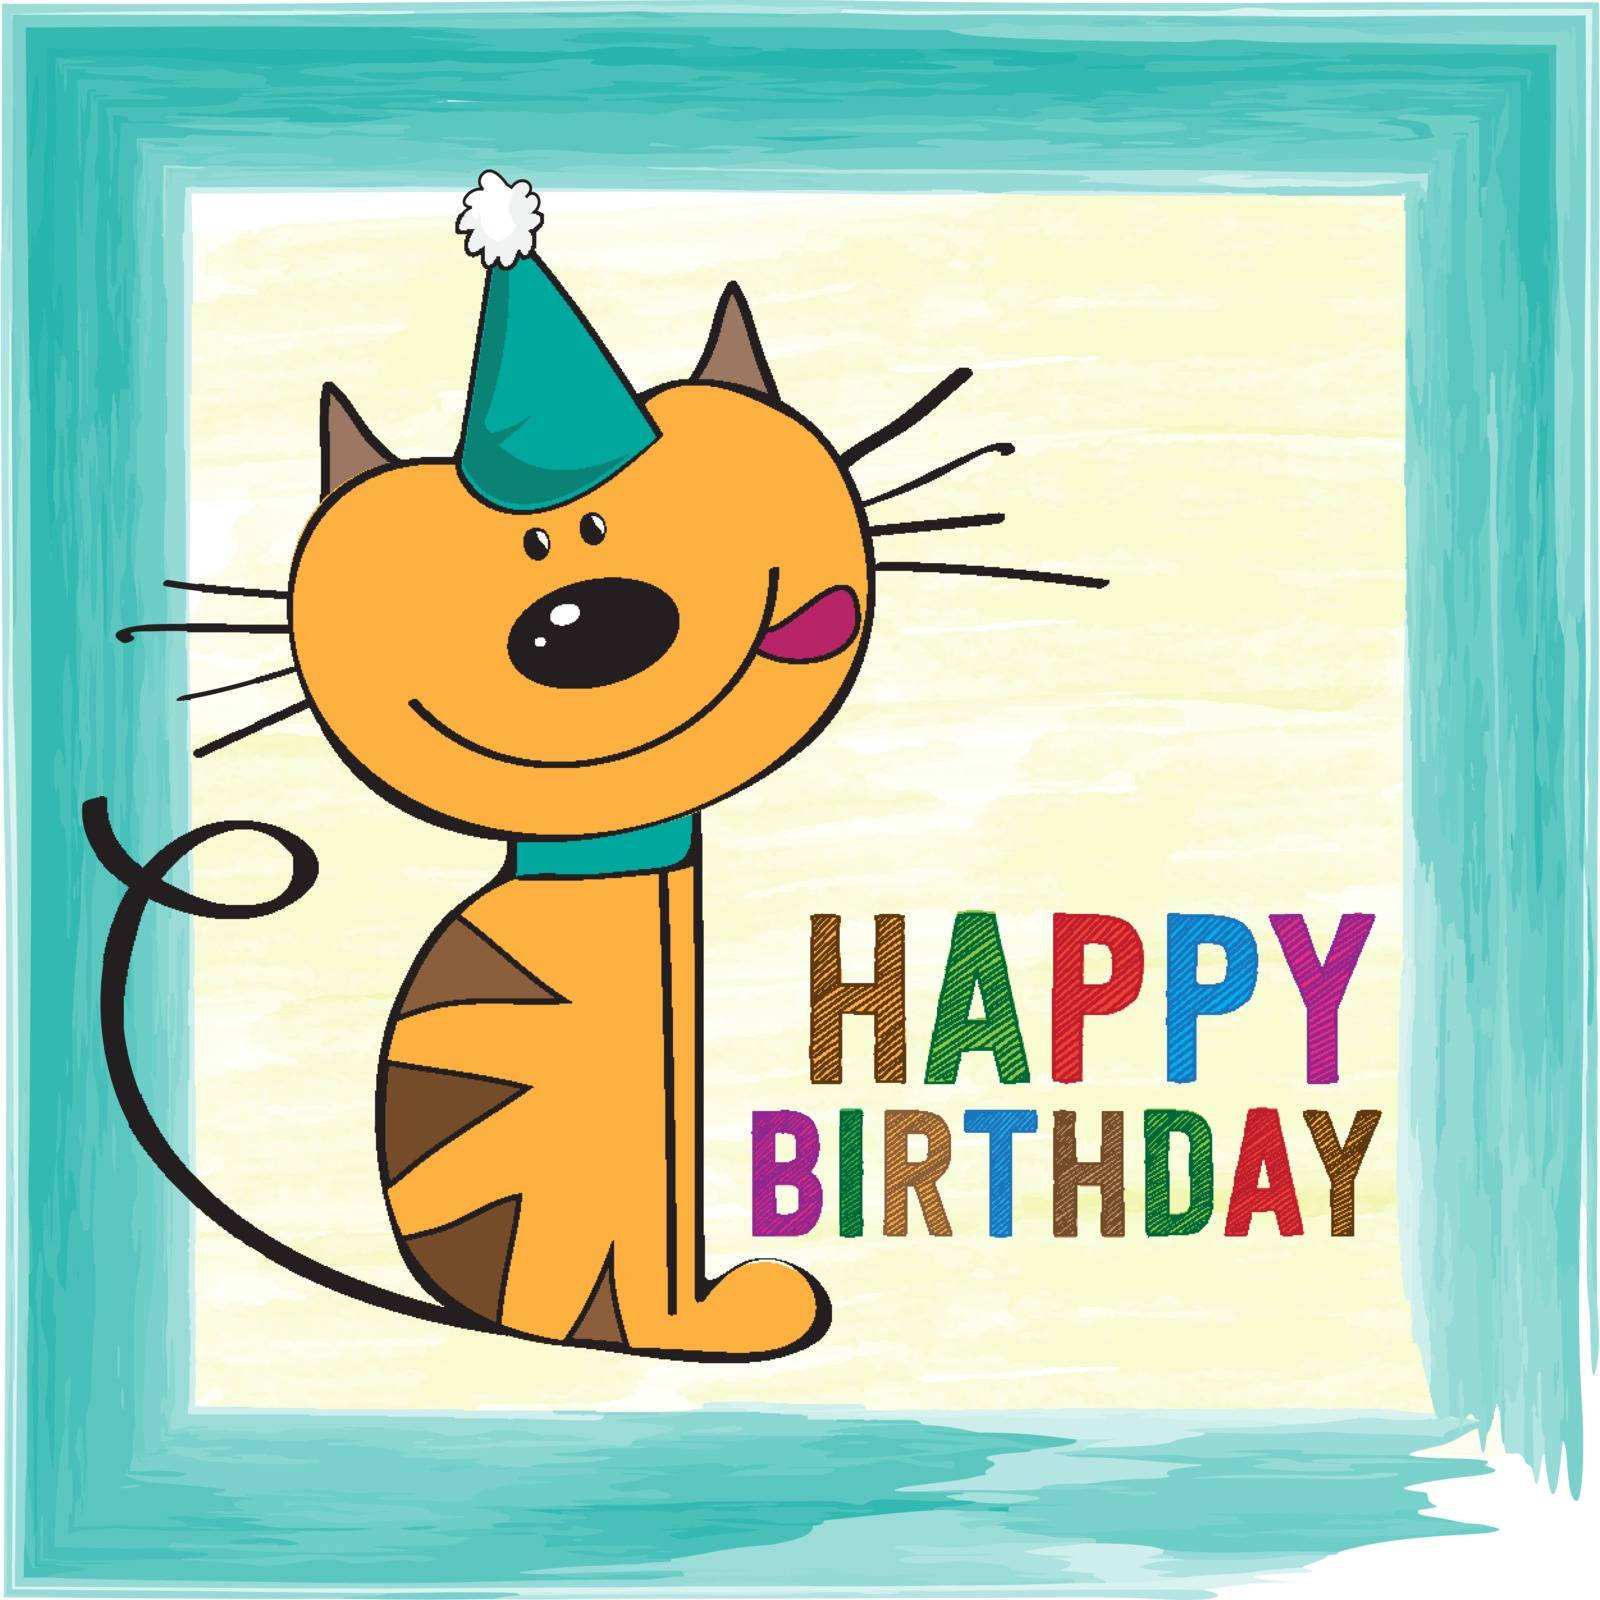 childish birthday card with funny little cat by balasoiu